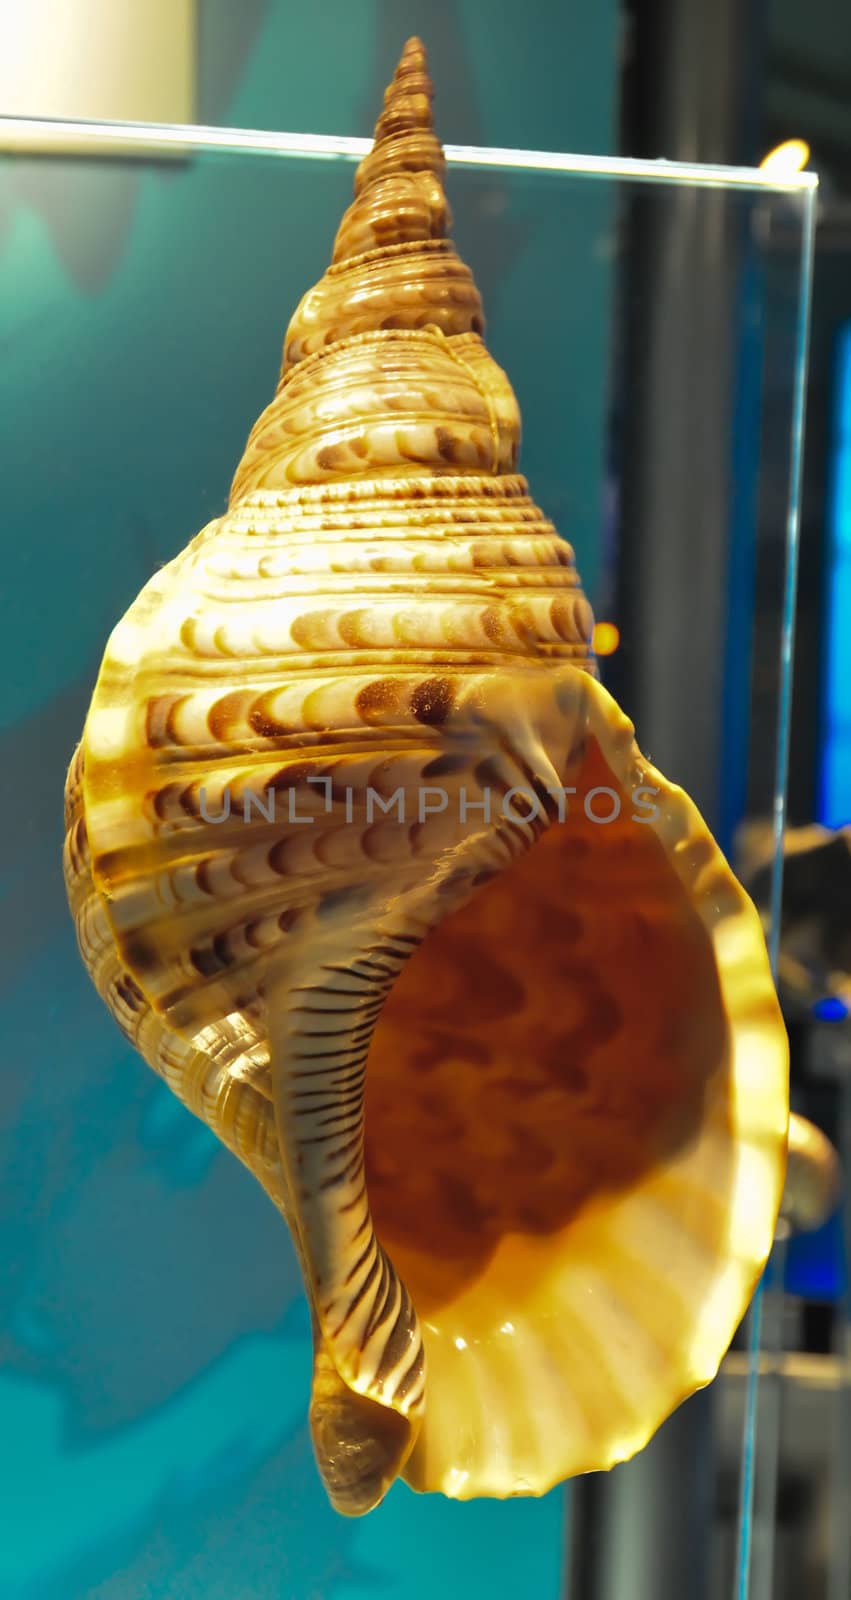 big orange sea shell on display at museum